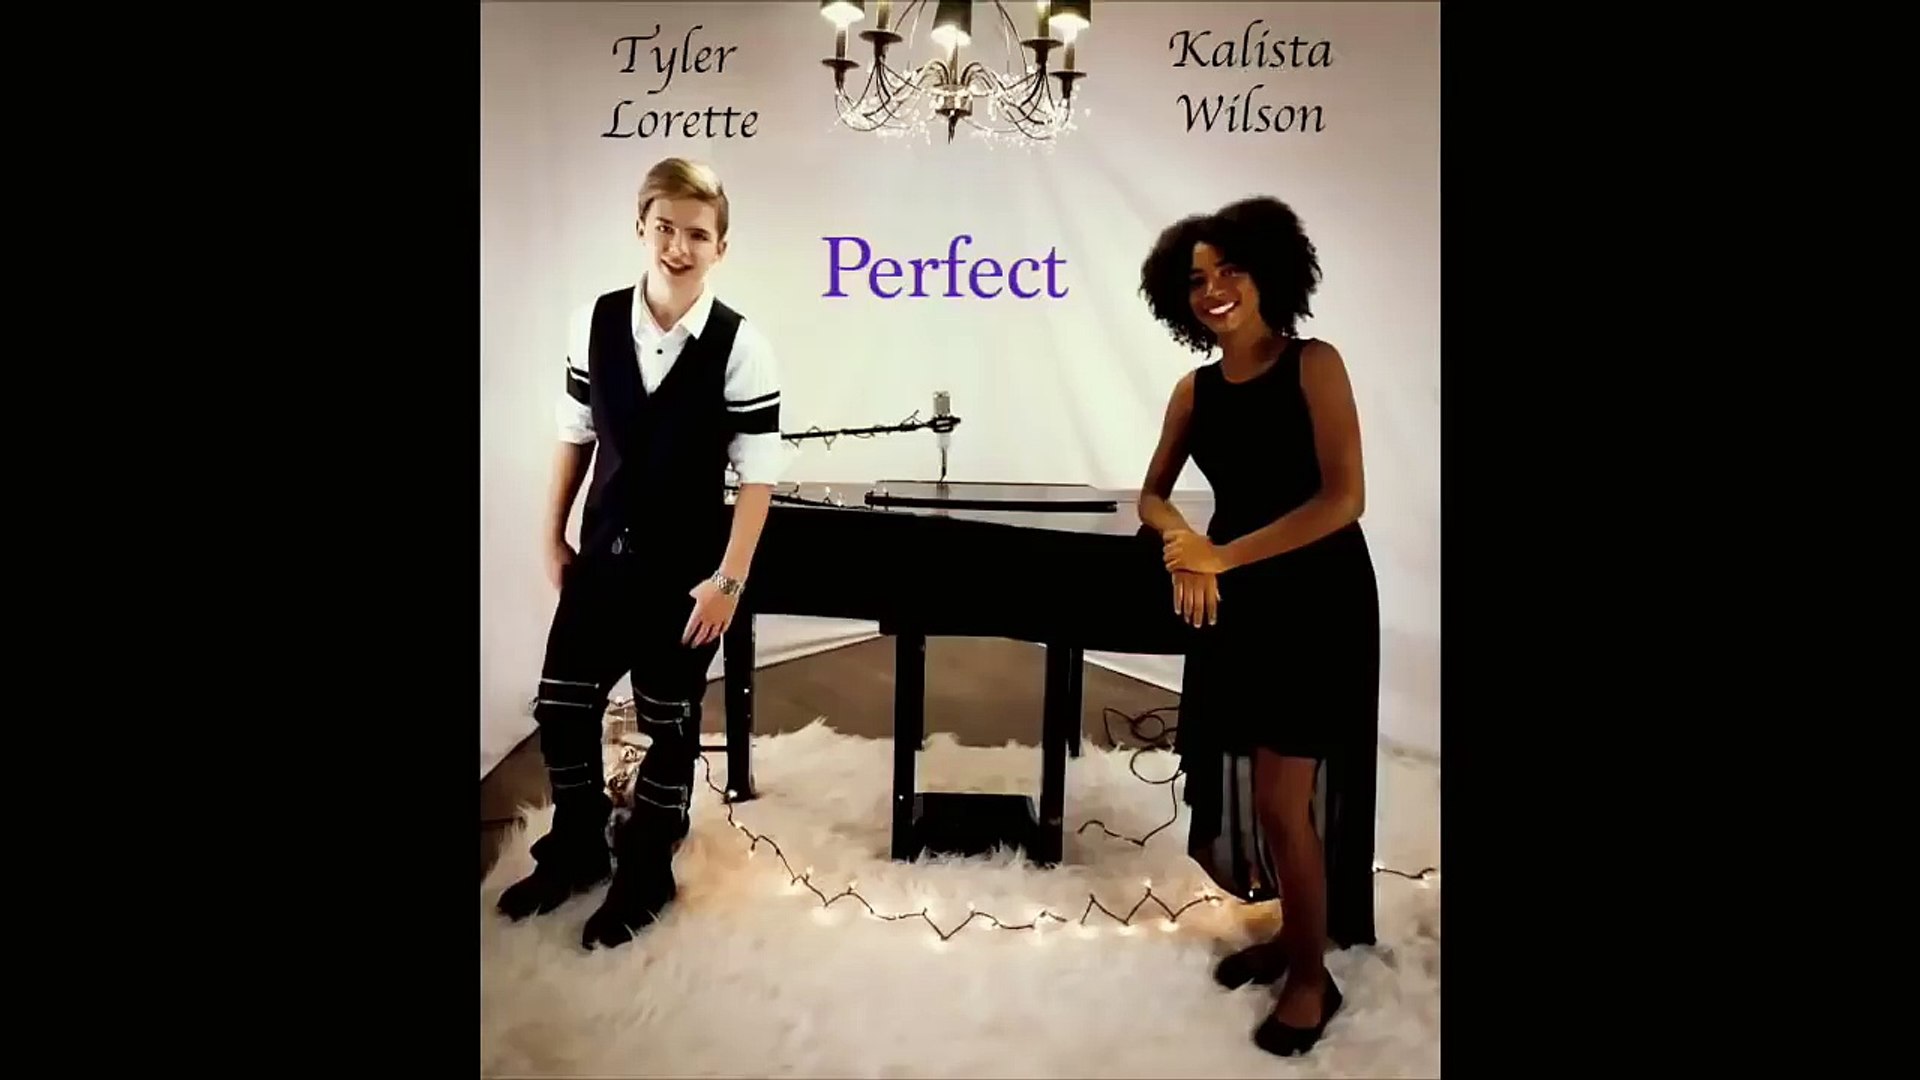 Perfect- Ed Sheeran-Beyonce (Tyler Lorette & Kalista Wilson Cover)